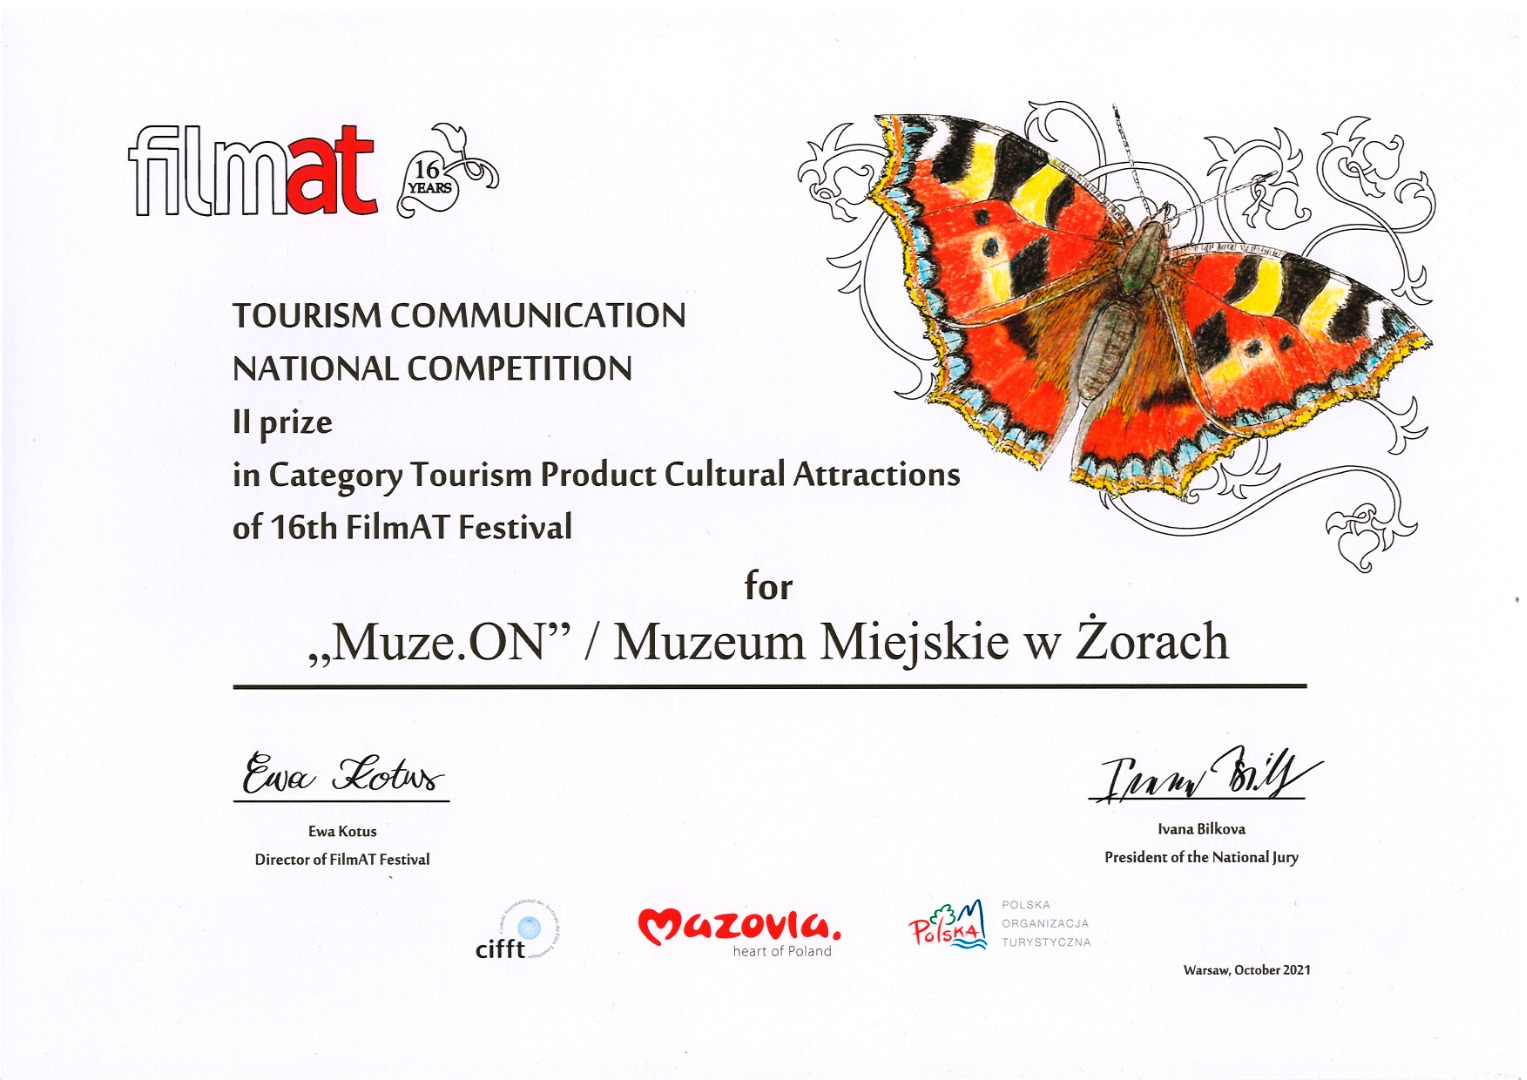 2nd prize in Category Tourism Product – 16. edycja Festiwalu FilmAT